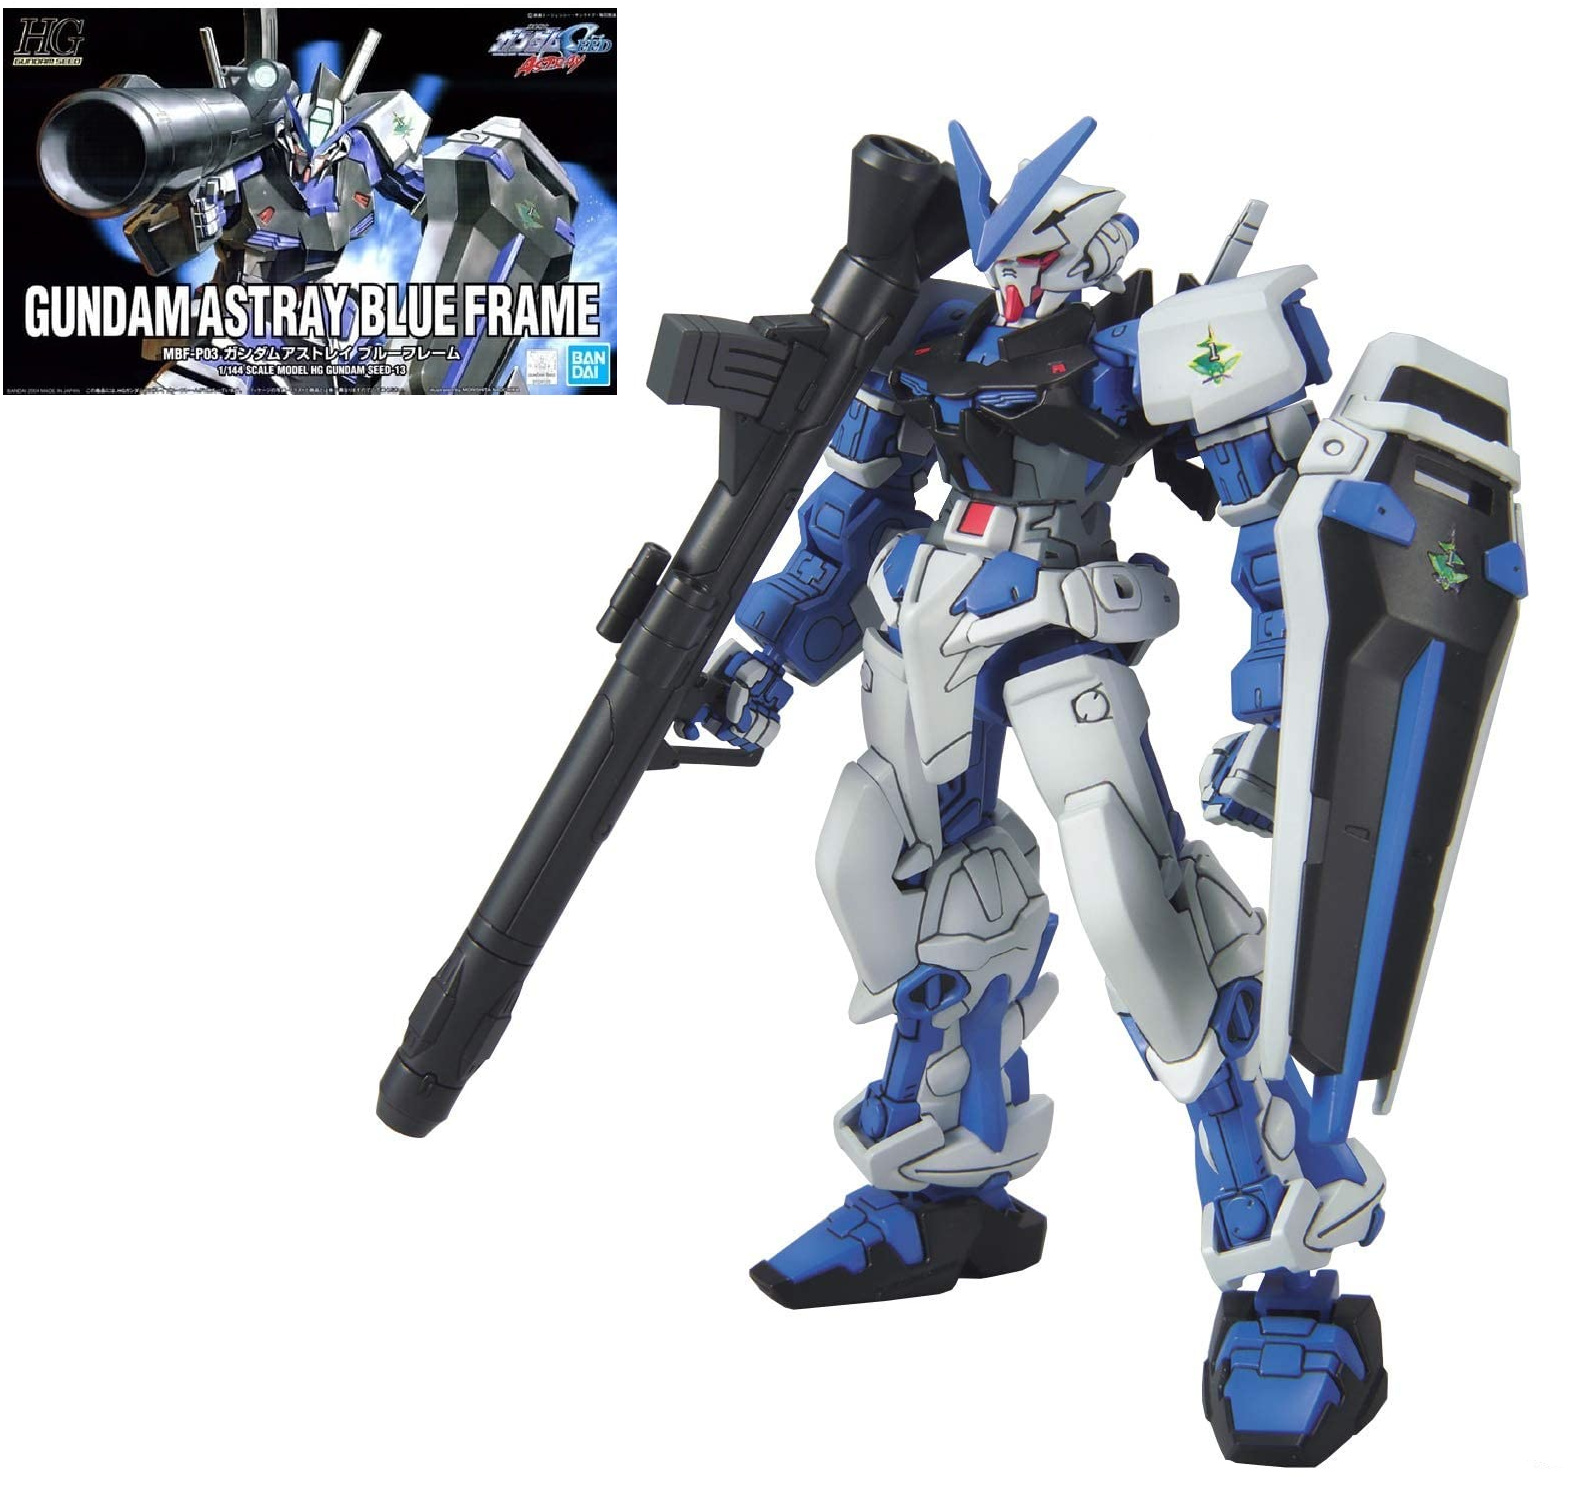 Bandai -Gundam Seed Gundam Astray Blue Frame MBF-P03 HGCE 1 144